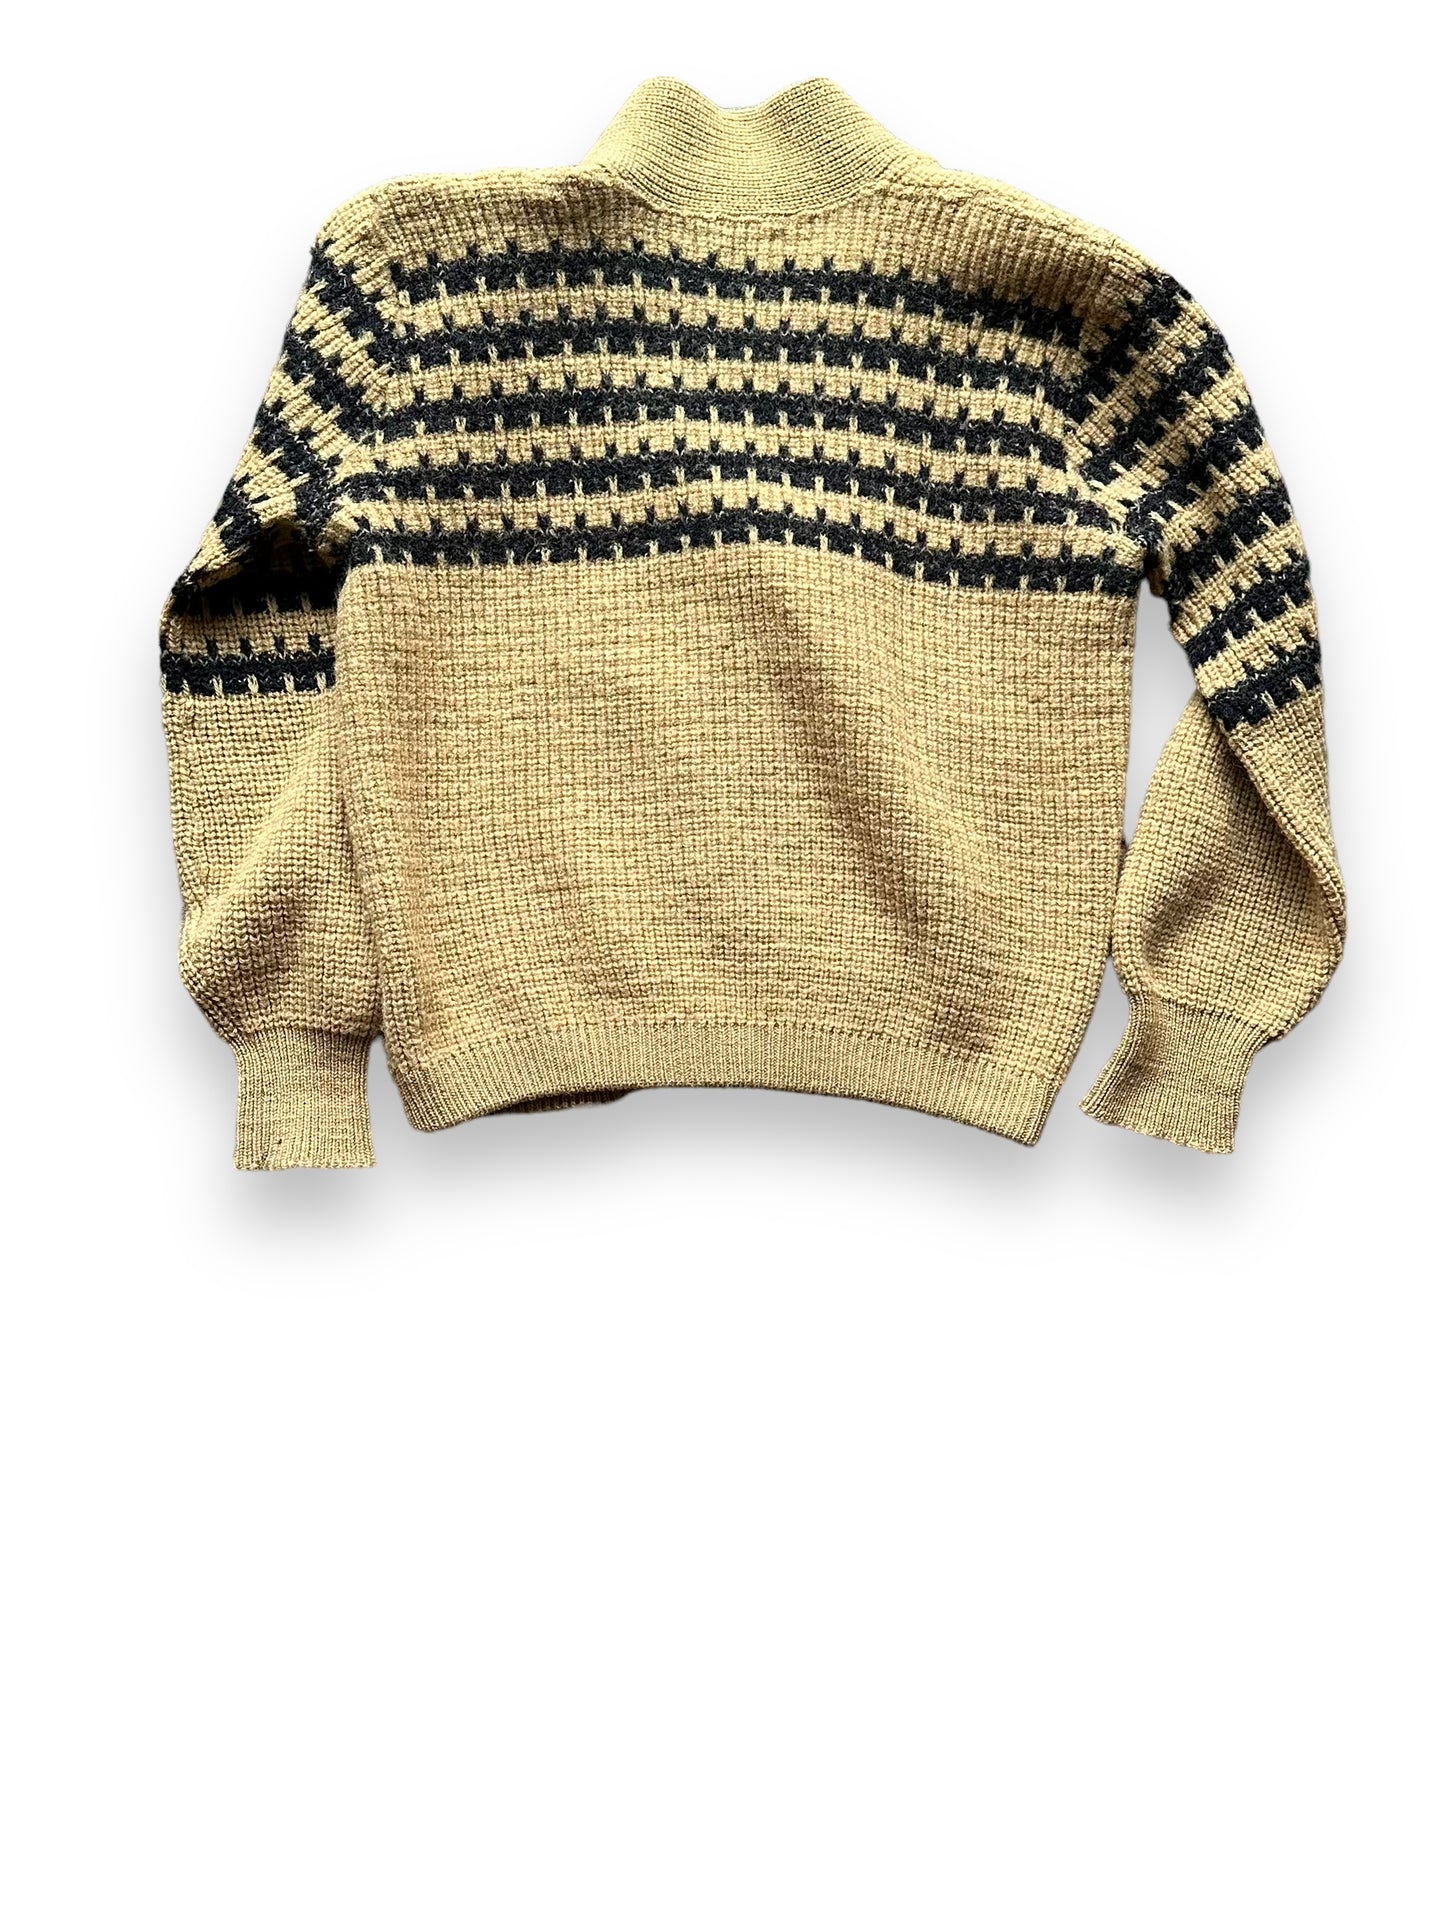 Rear View of Vintage Kennedys Wool Sweater SZ L | Vintage Cardigan Sweaters Seattle | Barn Owl Vintage Seattle